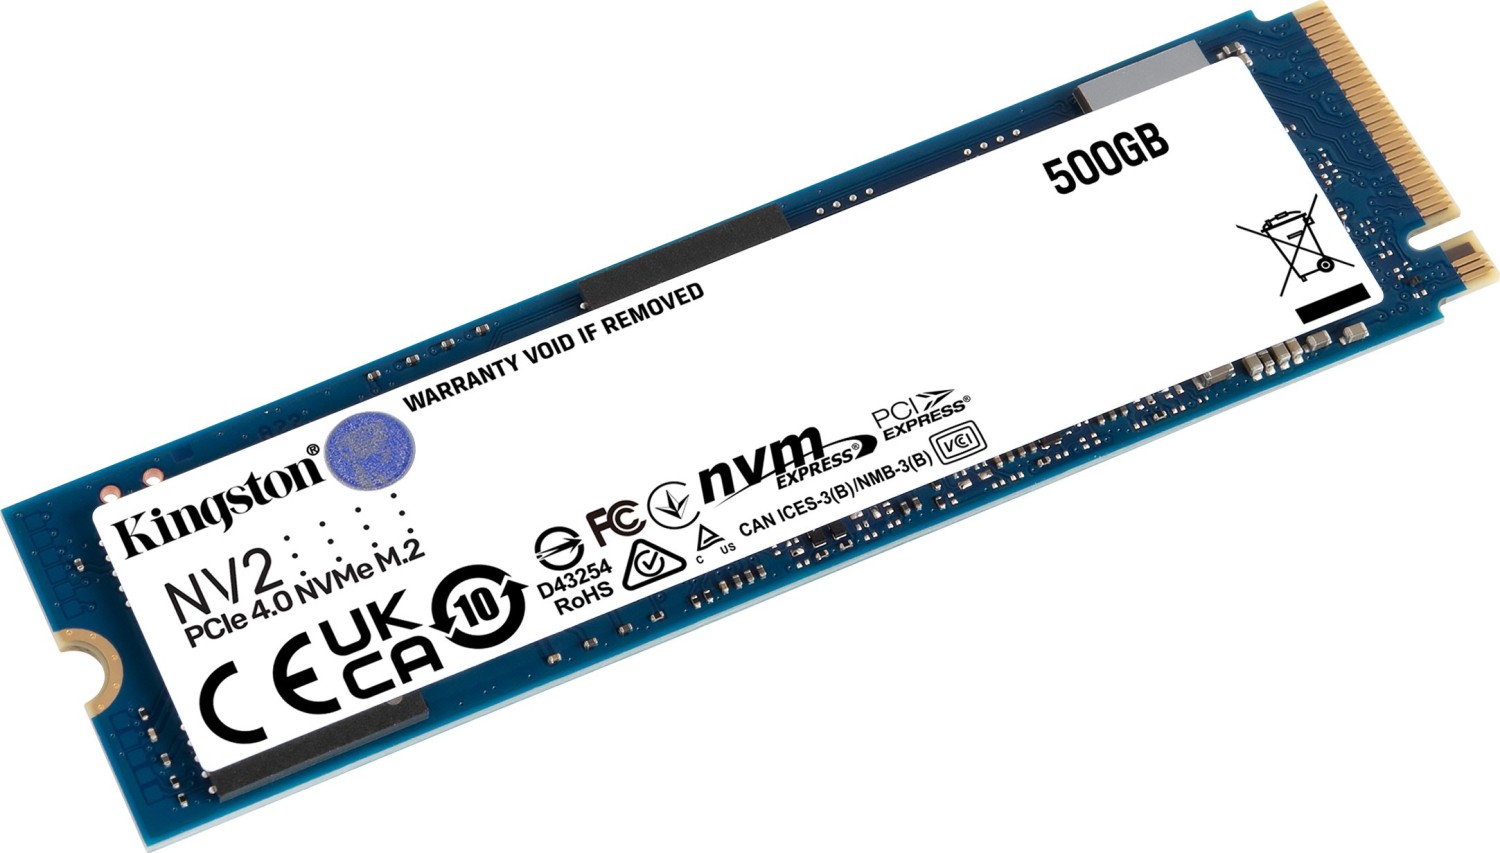 500 GB Kingston NV2 NVMe PCIe SSD, M.2